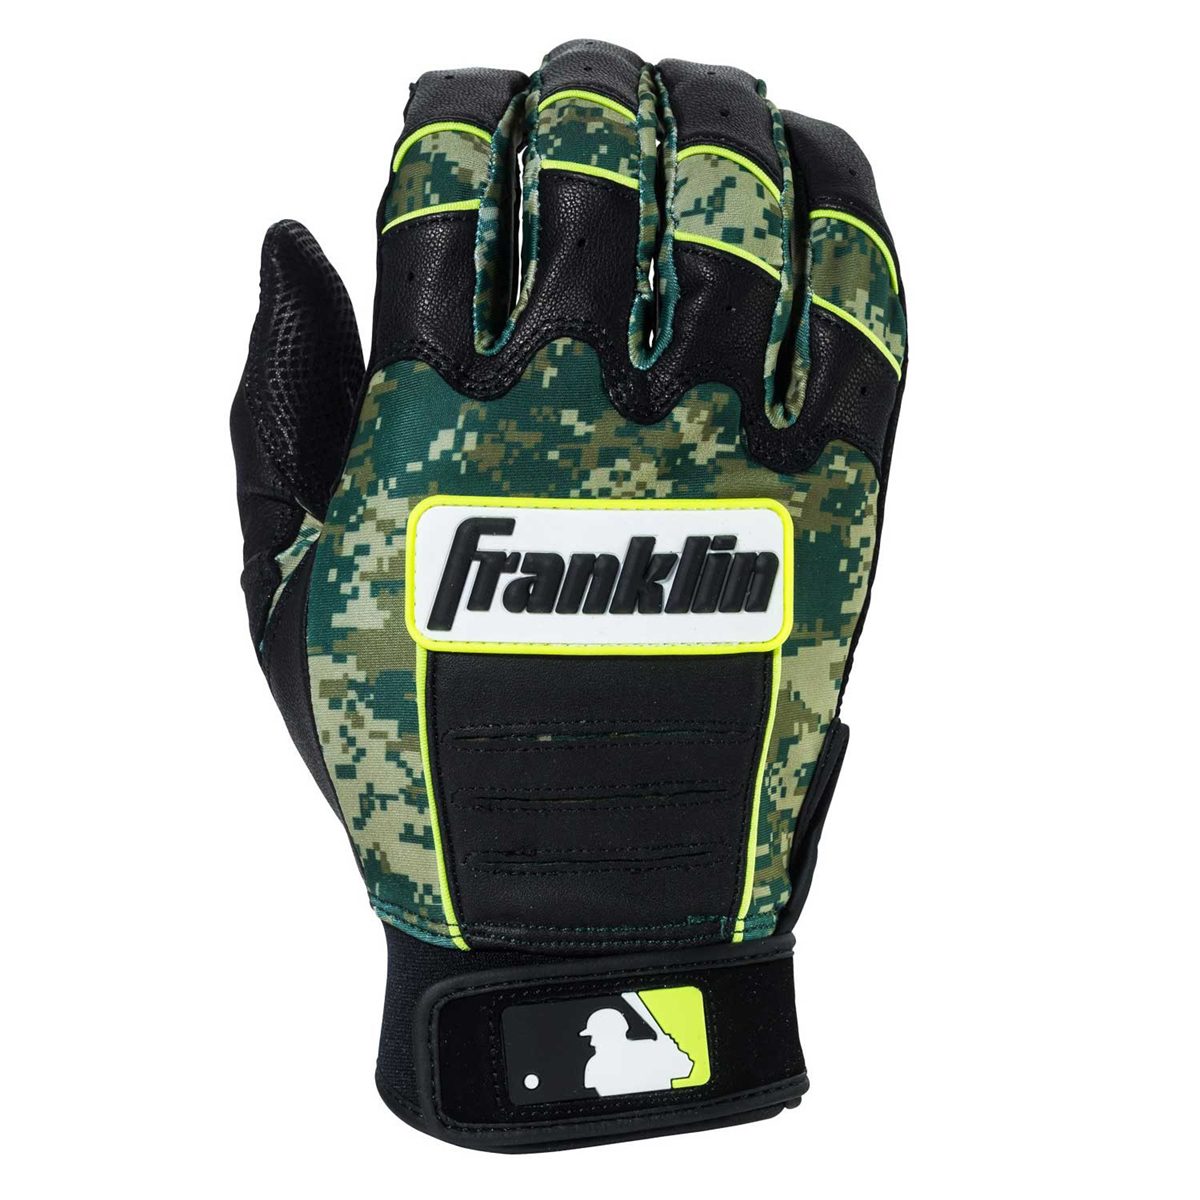 Franklin Cfx Pro Digi Camo Men's Batting Gloves | Size Small Black/optic Yellow/green